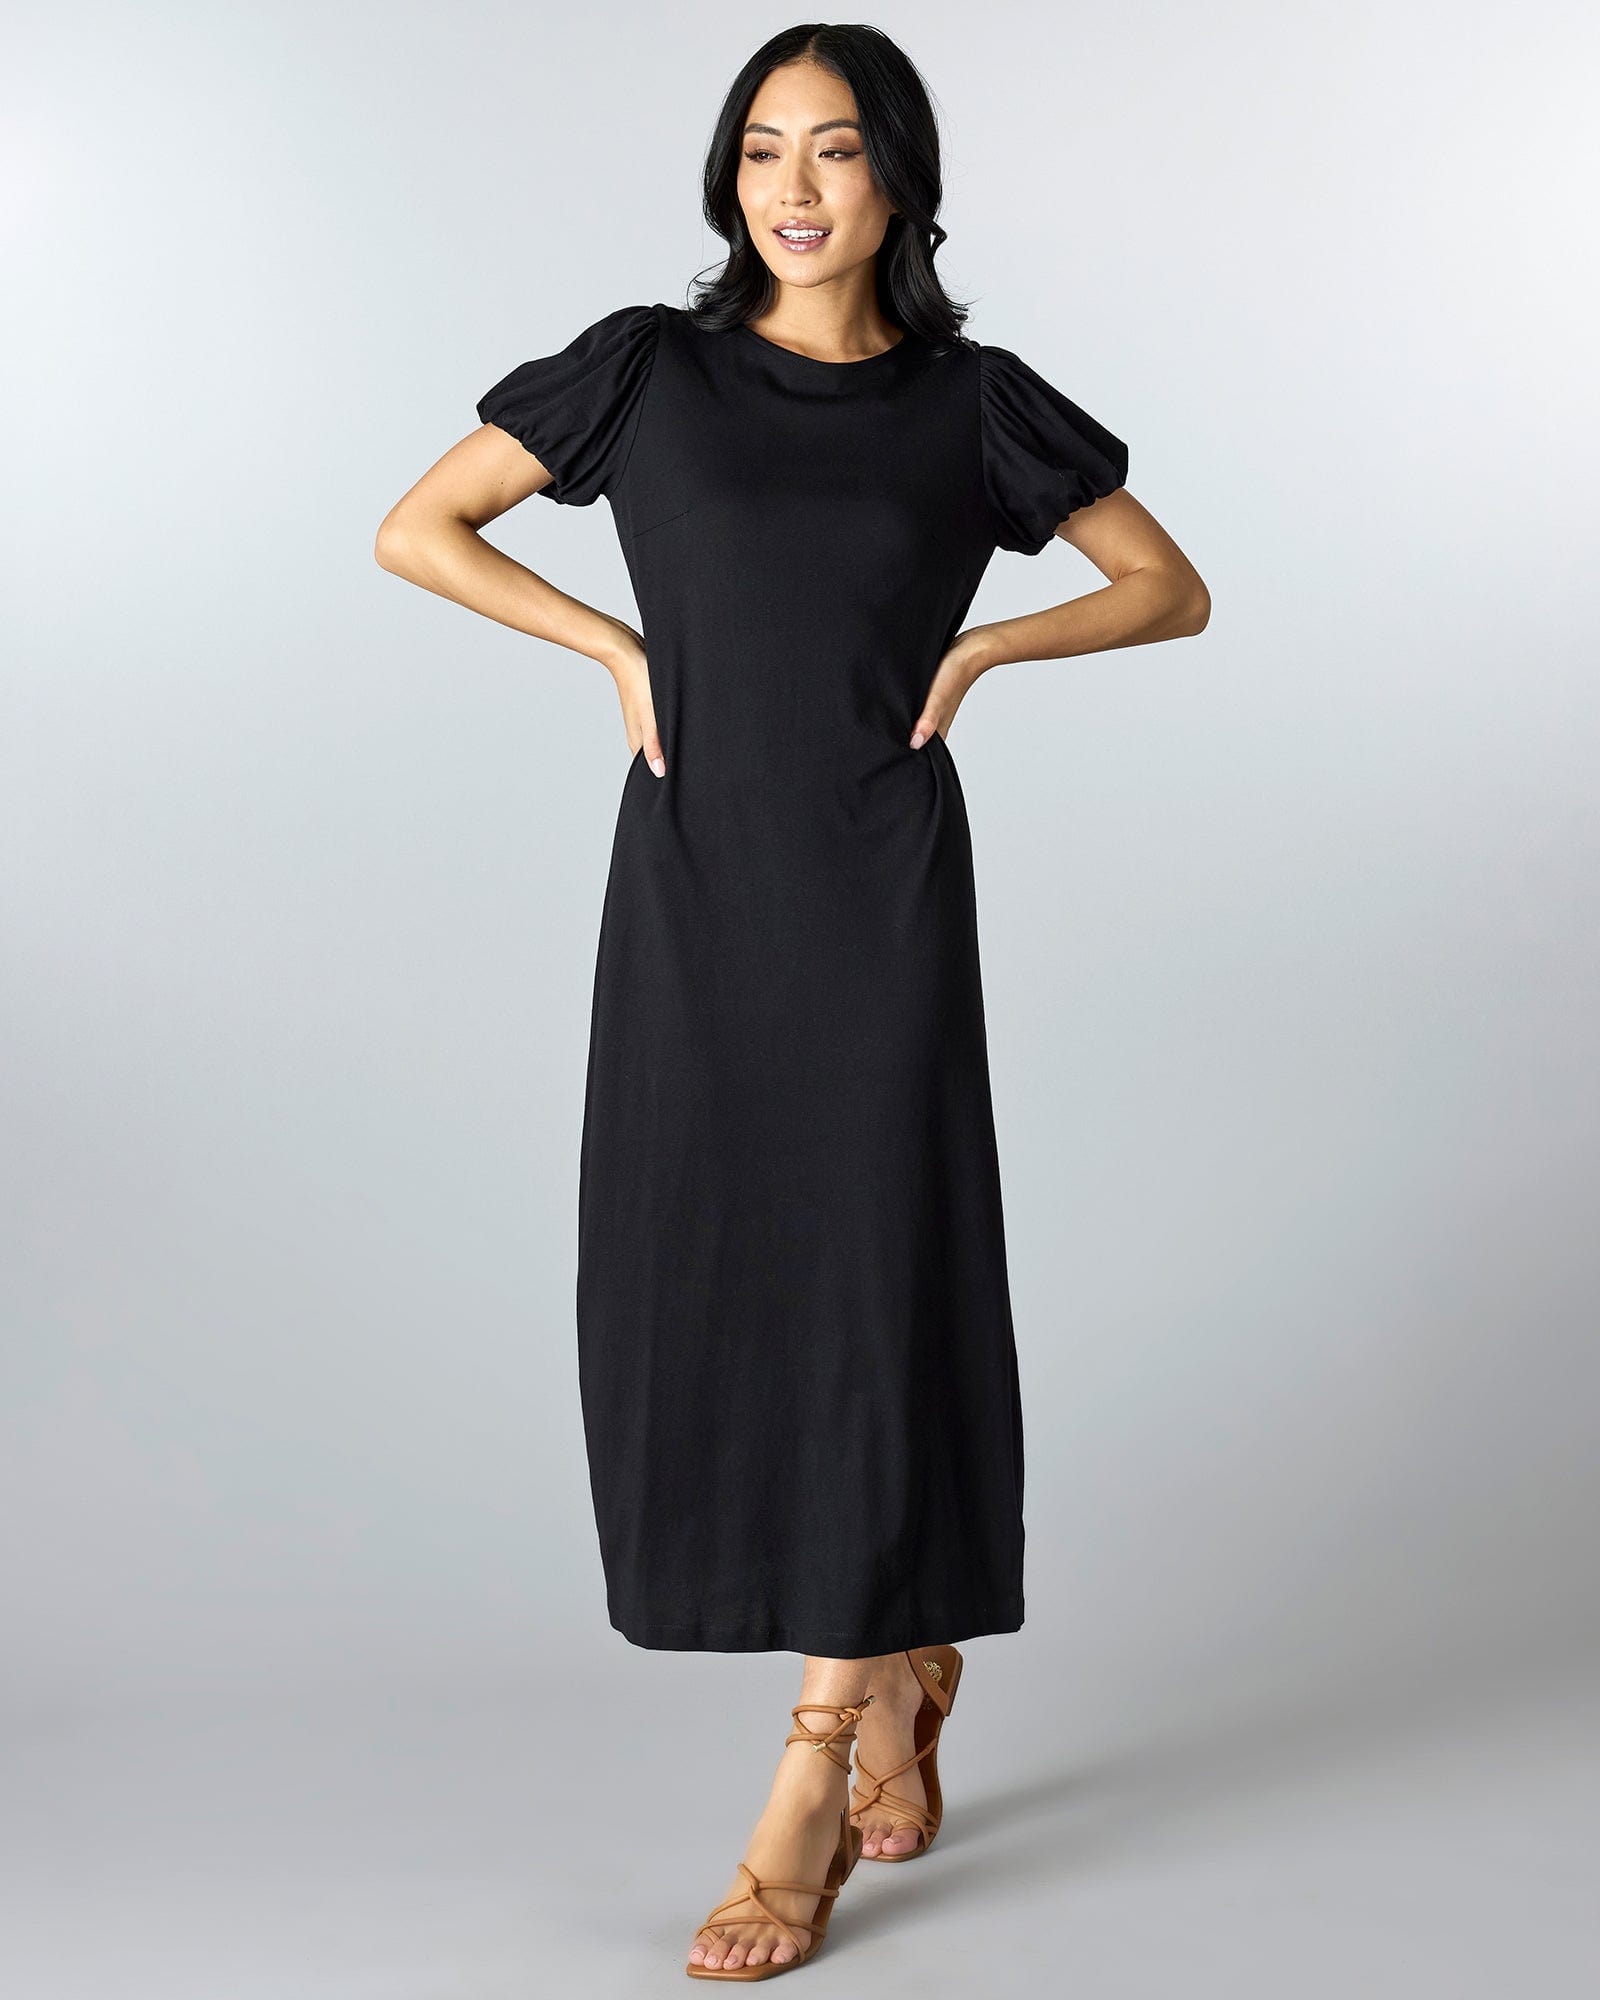 Woman in a black short sleeved, maxi sheath dress.